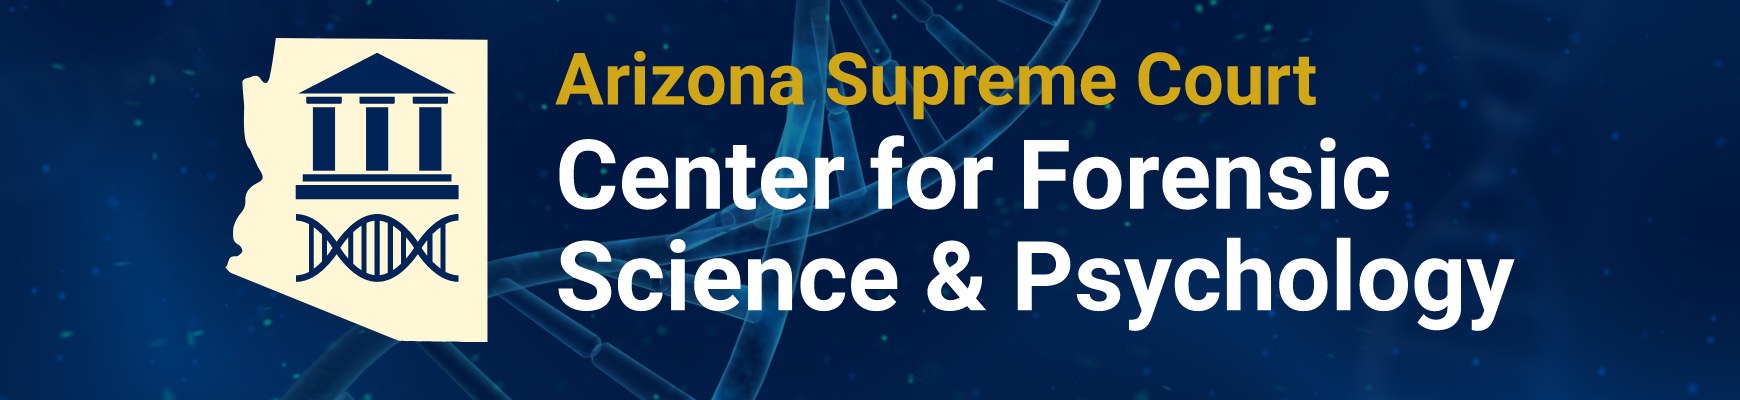 Center for Forensic Science & Psychology banner